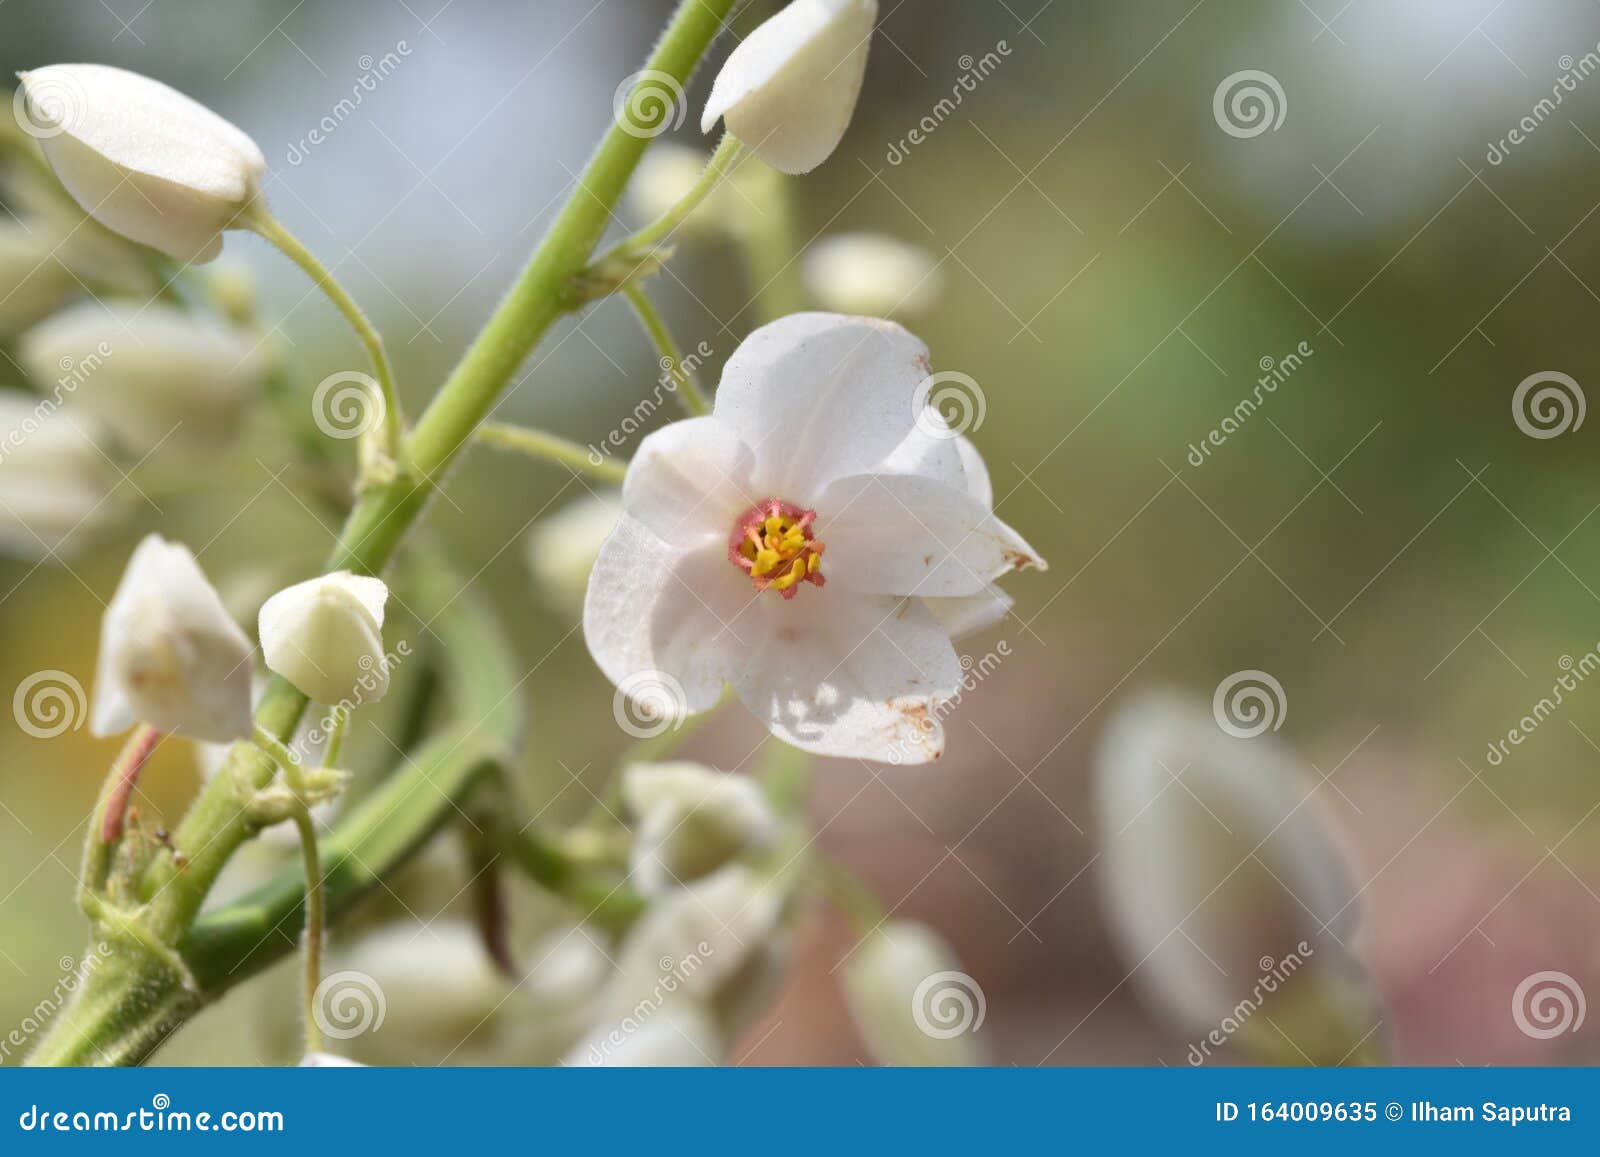 White Mexican Creeper Coral Vine Flower Stock Image Image Of Love Coralita 164009635